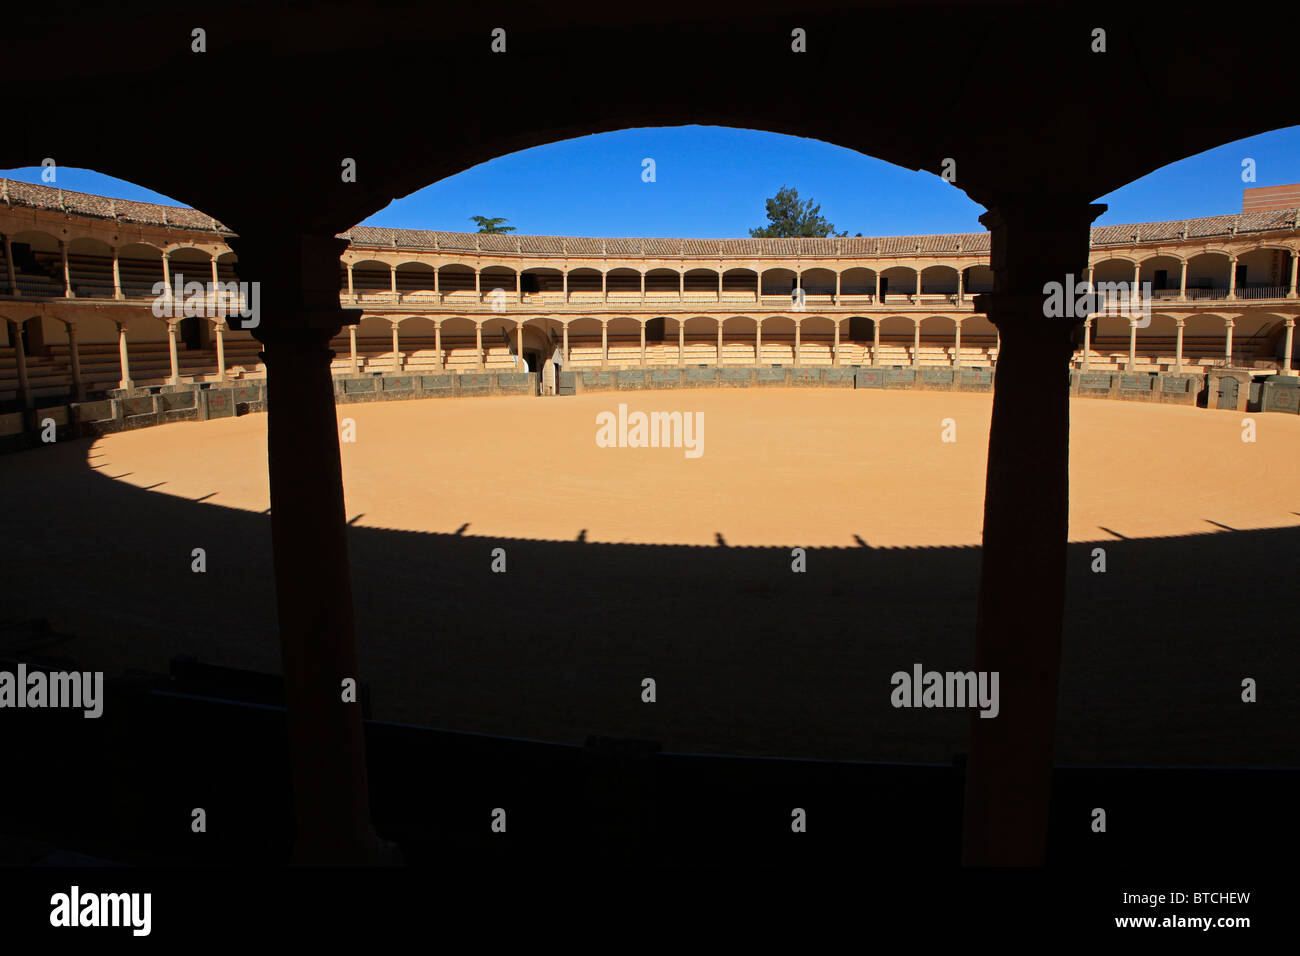 Plaza de Toros de Ronda (bullring) in Ronda, Spain Stock Photo